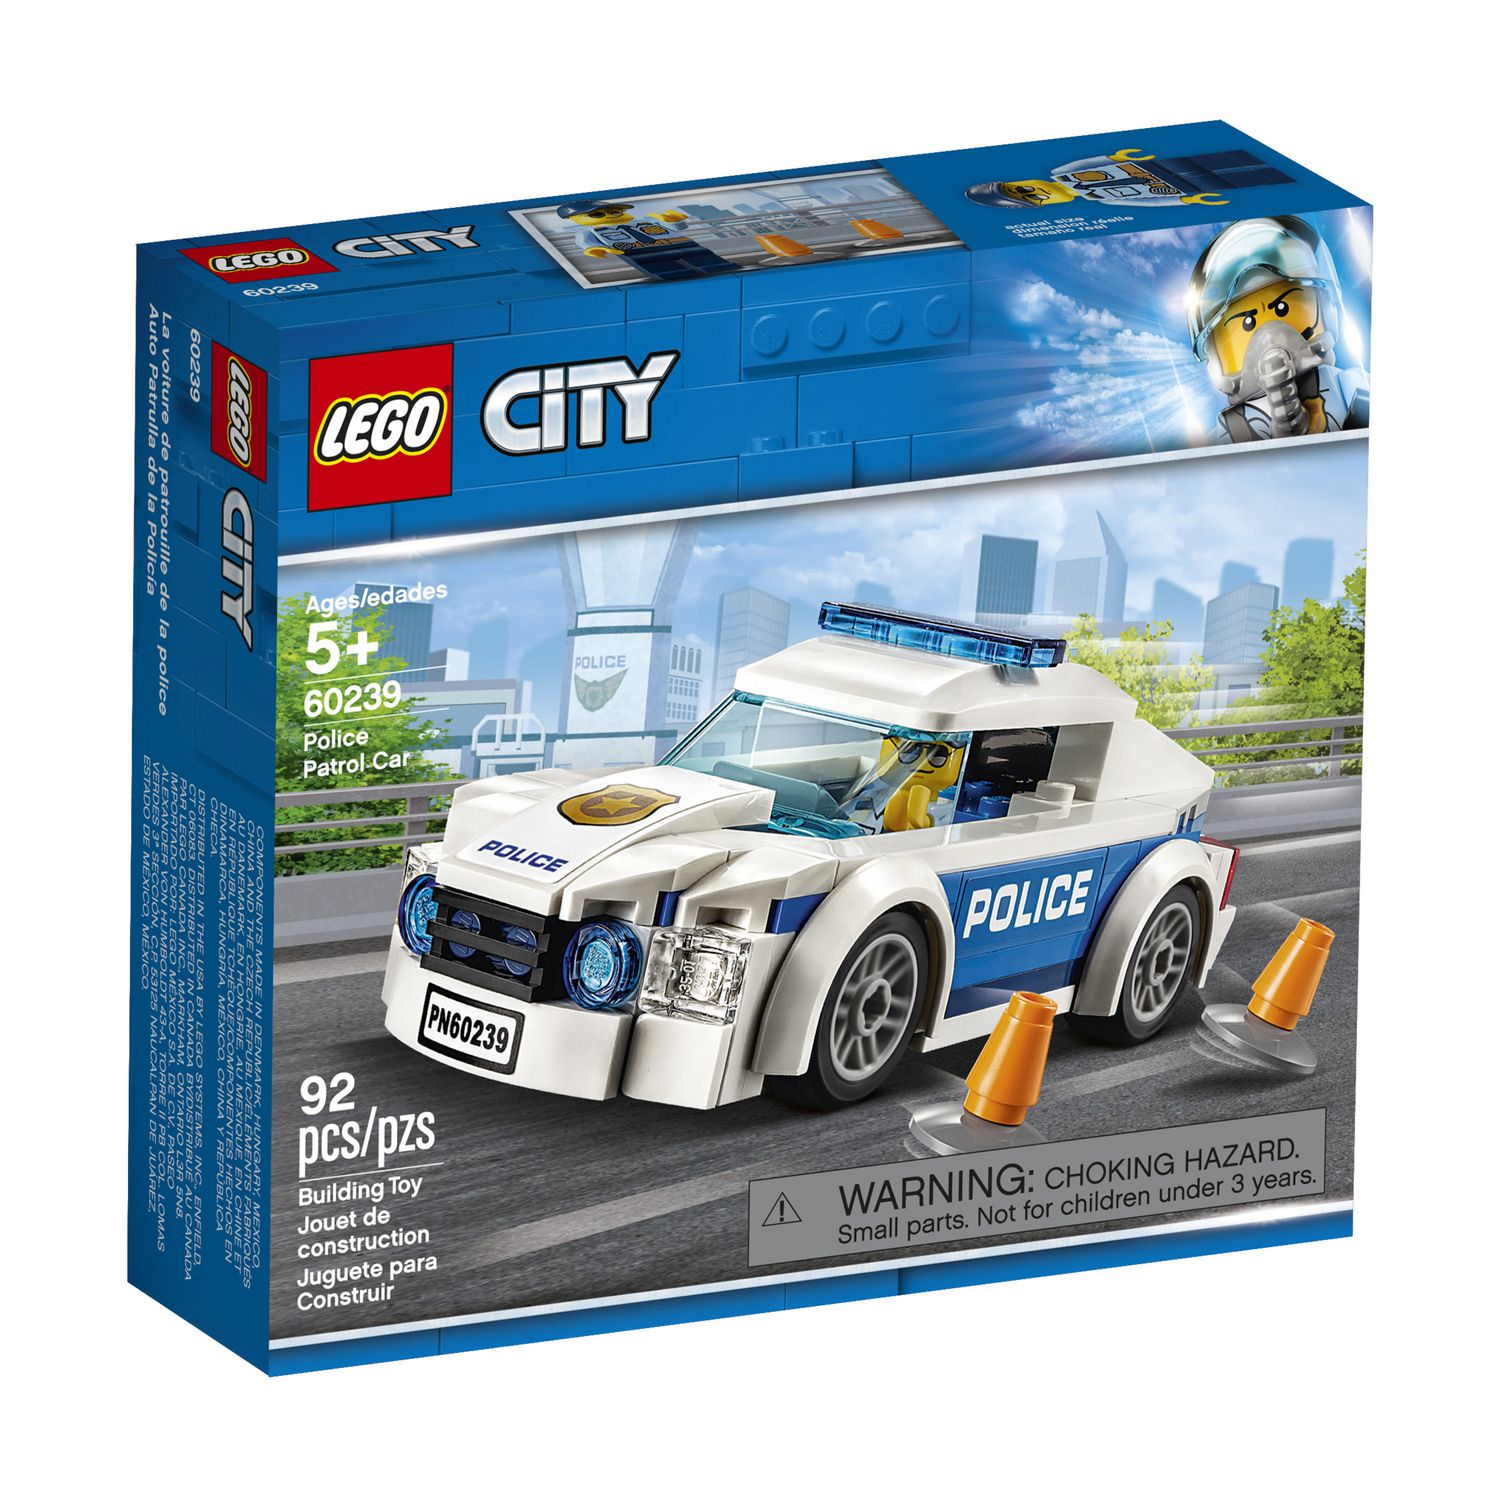 60239 Lego City Police patrol car box set 